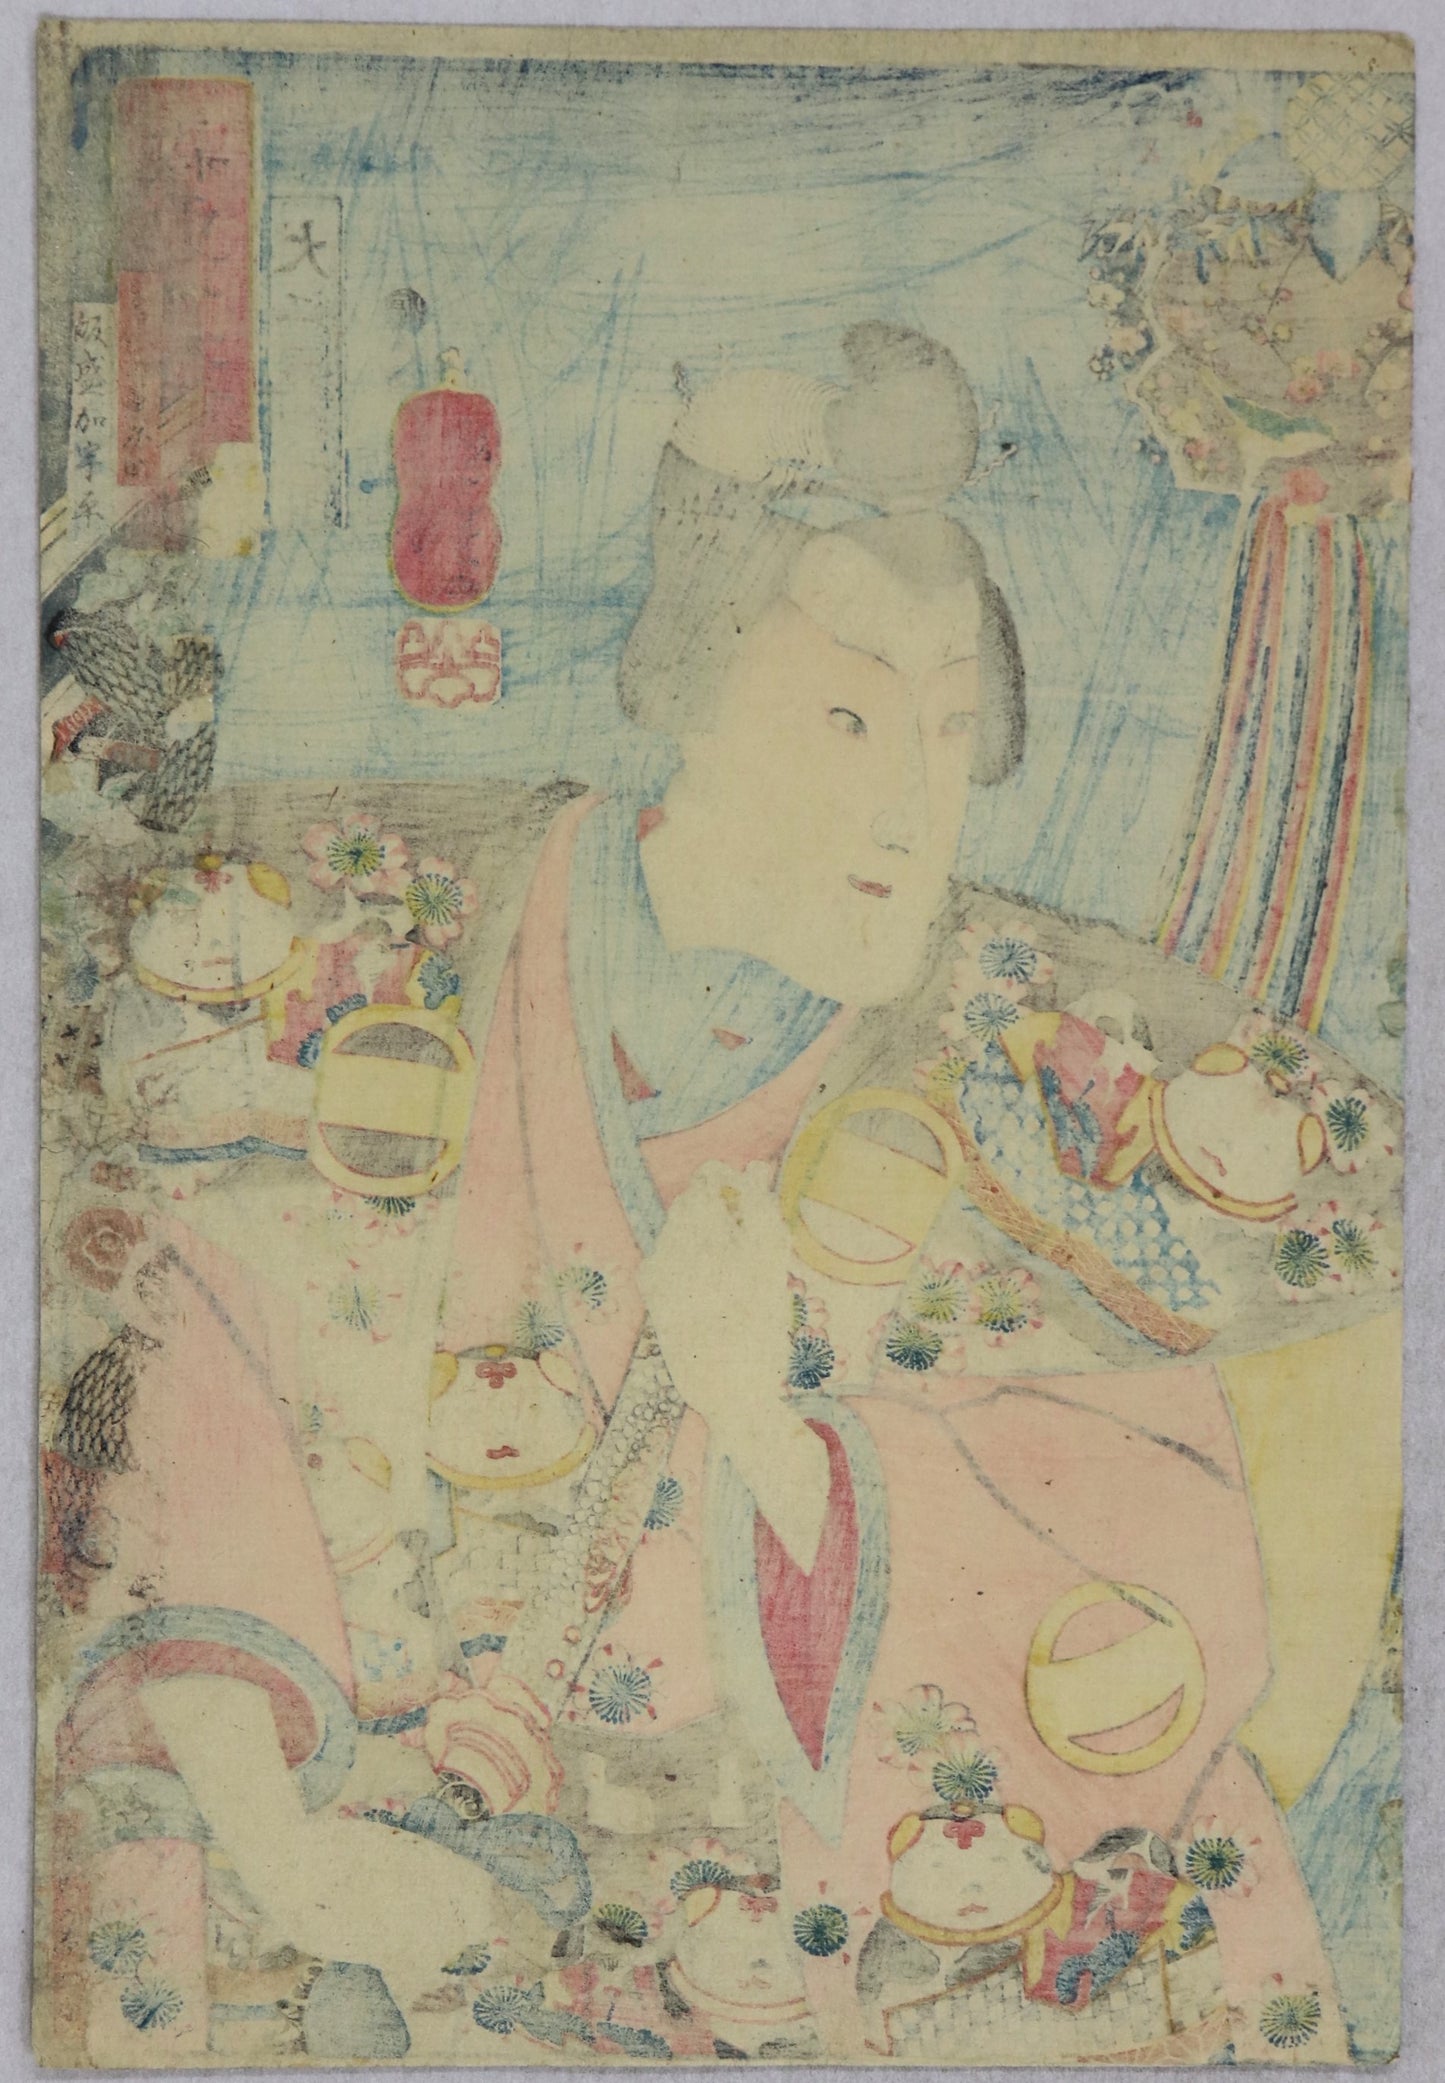 Iwai Kumesaburô III as Inue Shinbei from the series " The Loyal Heroes of Hakkenden" by Kuniyoshi / Iwai Kumesaburô III dans le rôle d'Inue Shinbei de la série " Les Héros Loyaux du Hakkenden de Bakin " par Kuniyoshi ( 1847-1848)